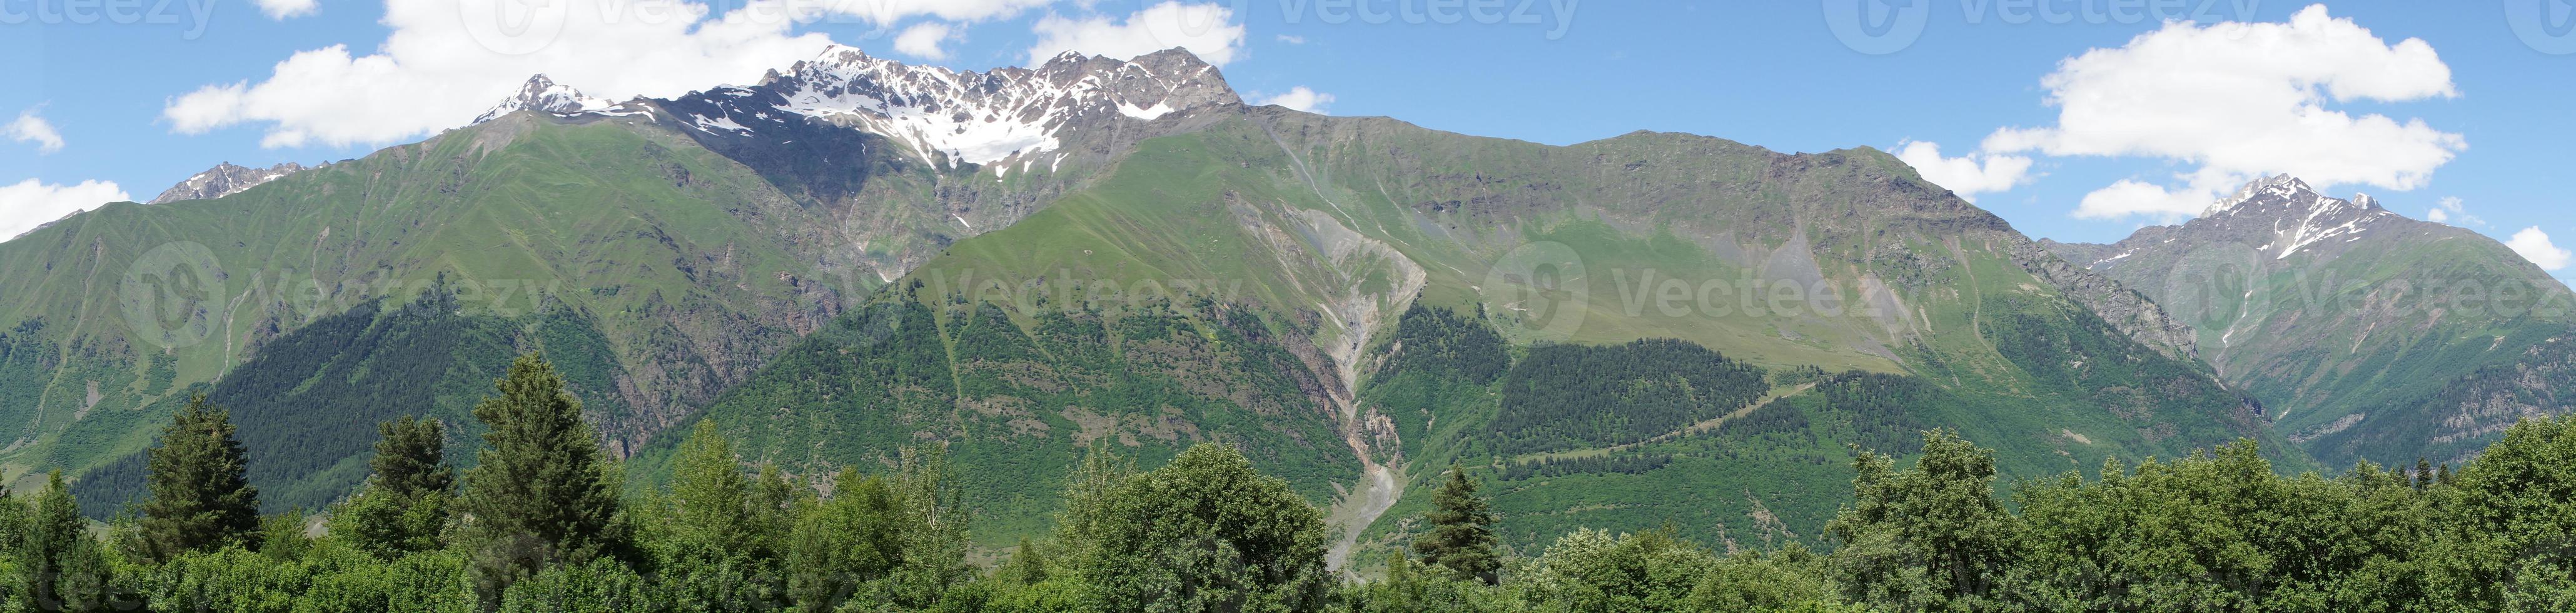 montañas del cáucaso, swanetia, georgia, europa foto